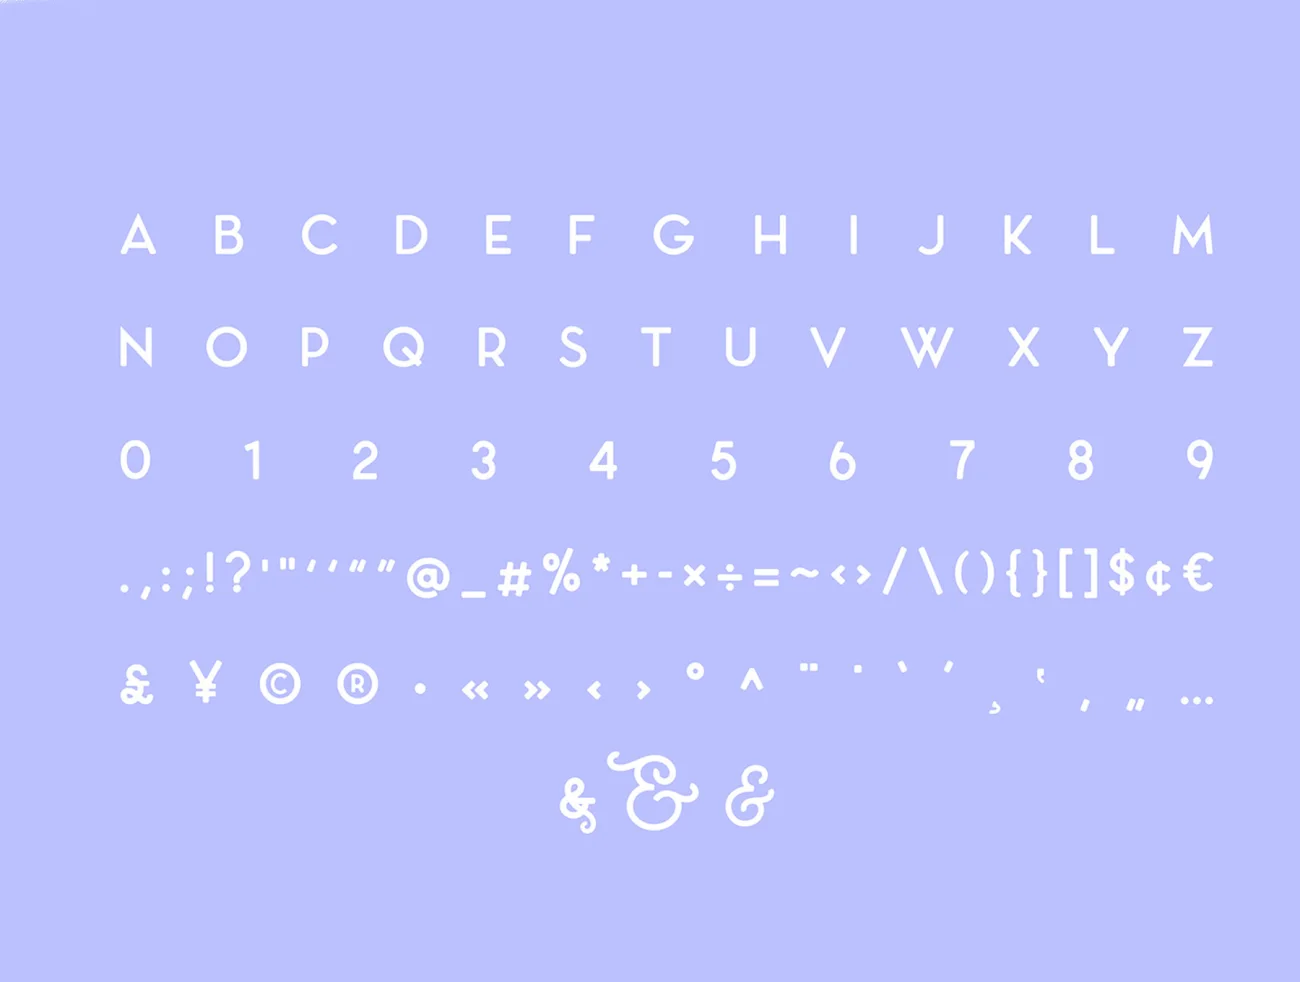 Carino - A Modern Elegant Sans Serif Family of 8 Fonts Carino-一个现代优雅的无衬线字体系列共有8种字体-字体-到位啦UI